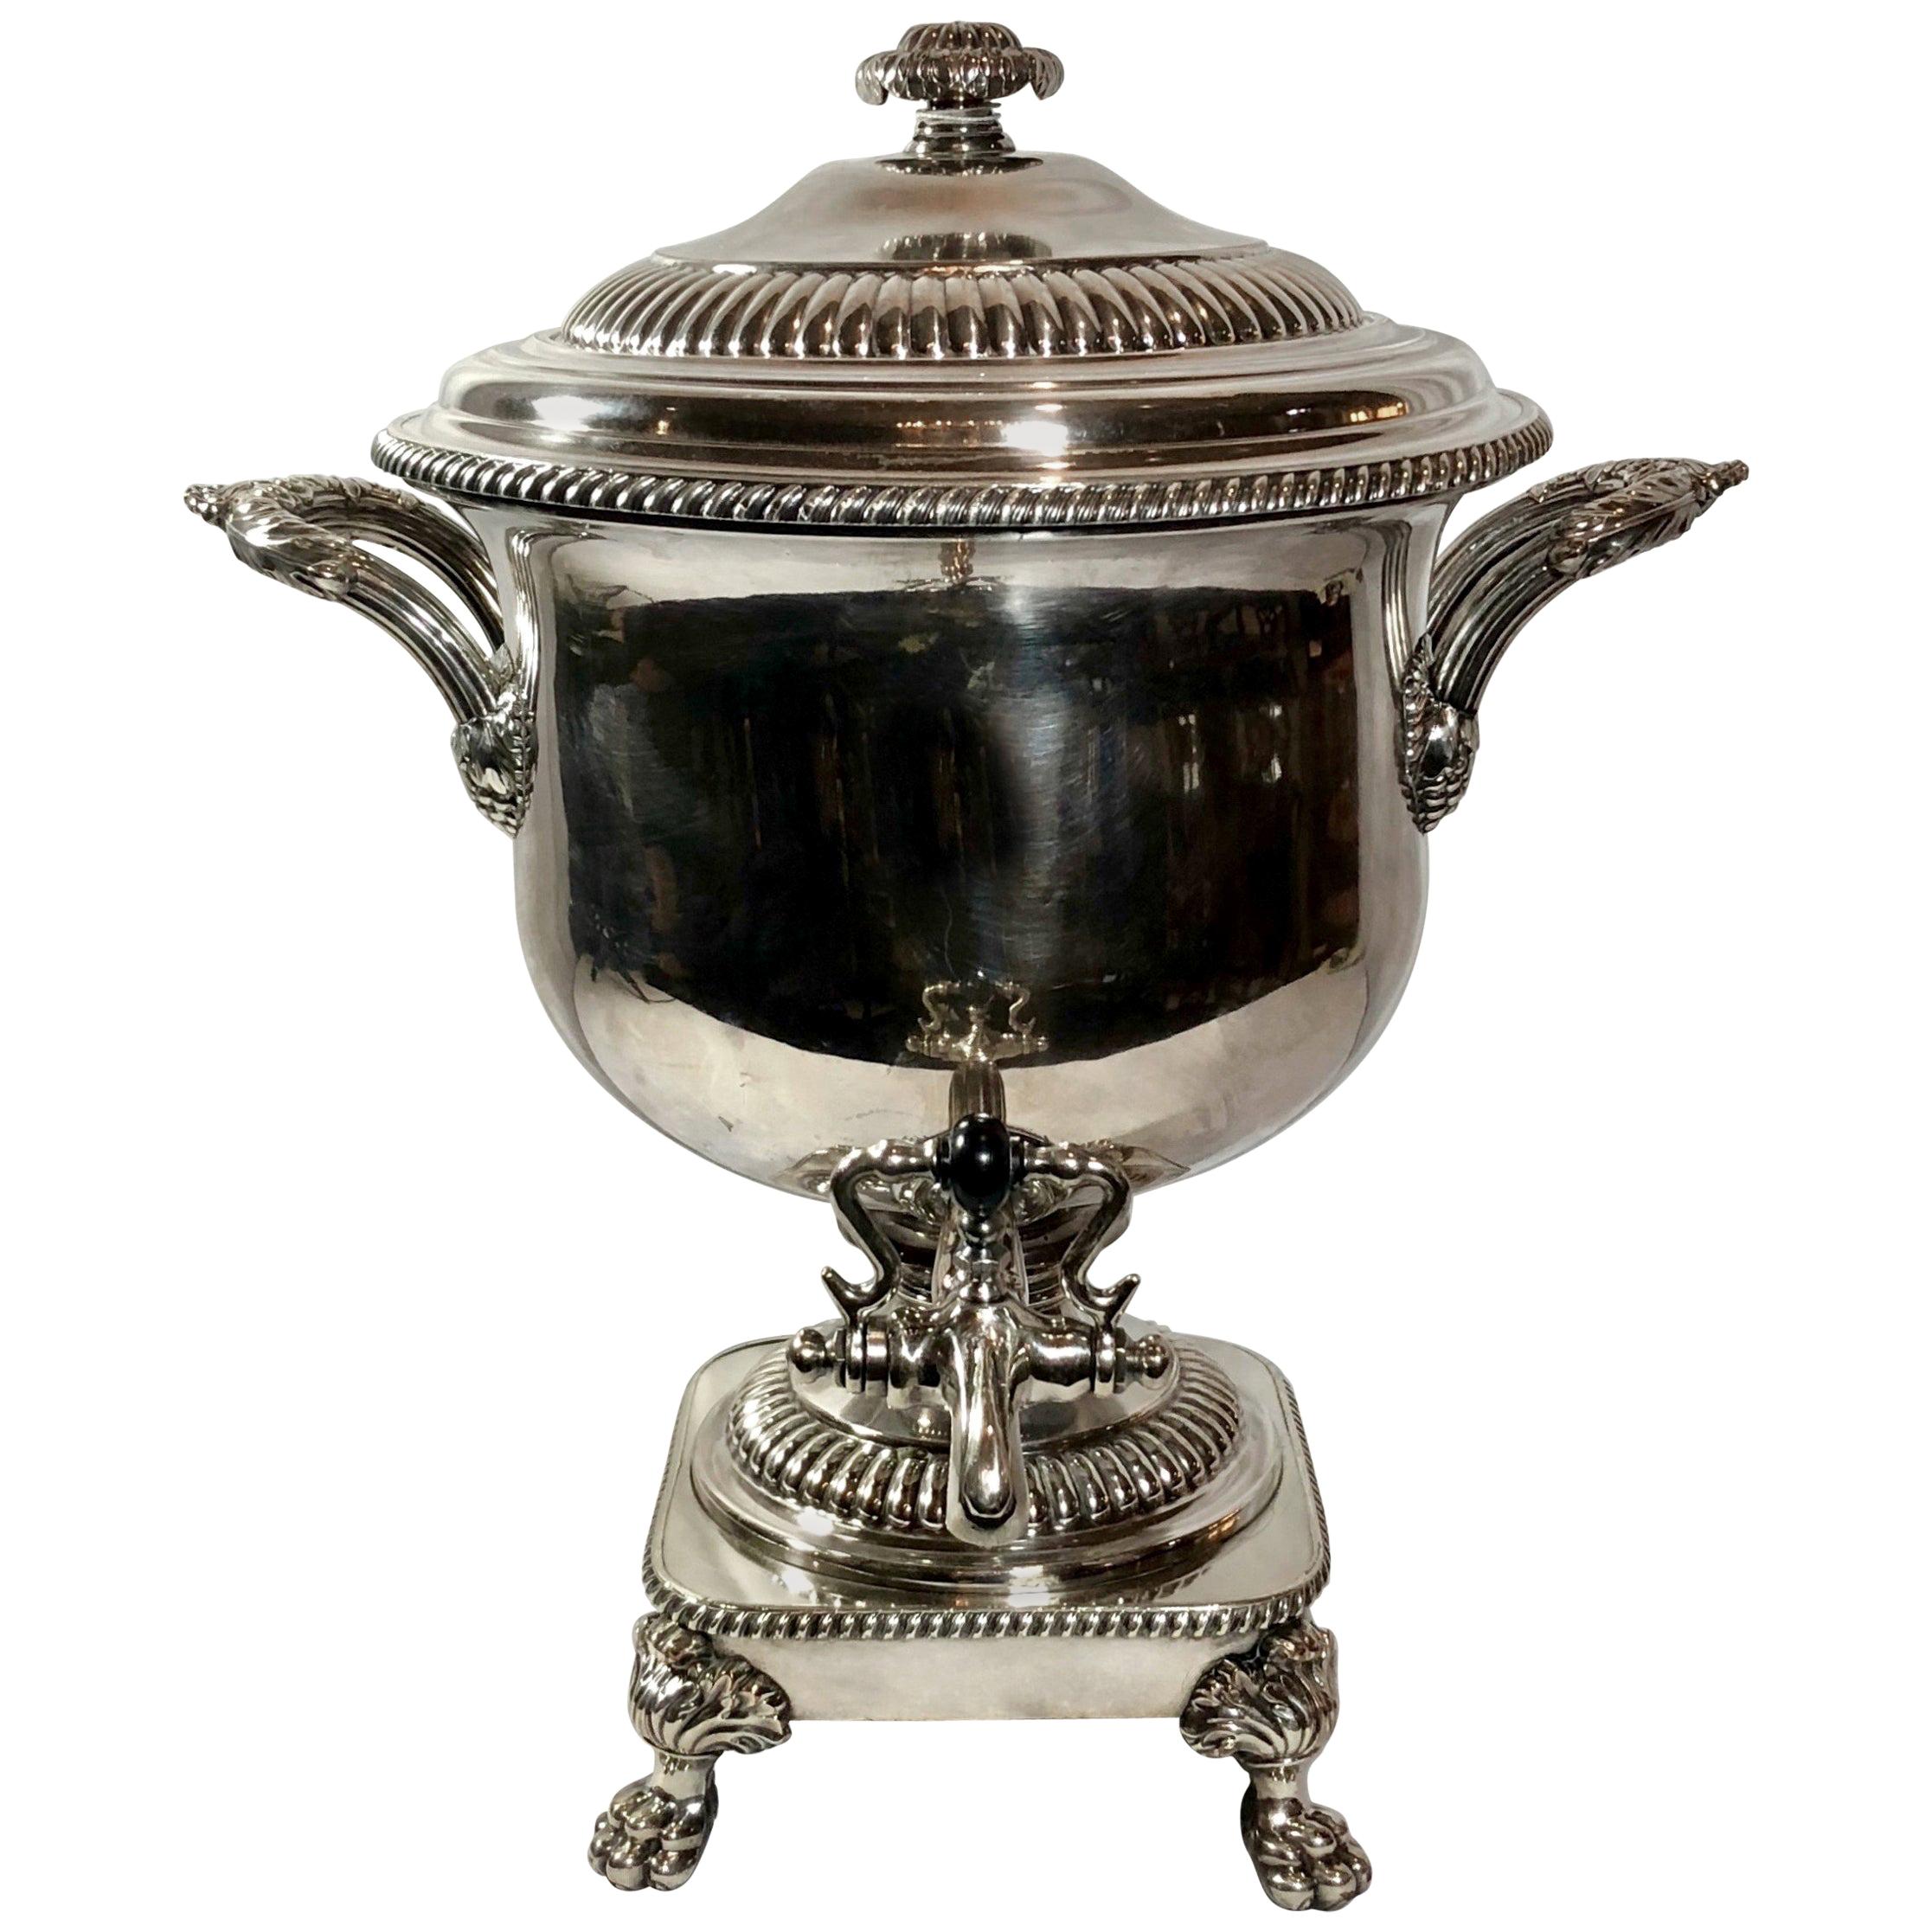 Antique English Sheffield Silver Hot Water Kettle, circa 1830